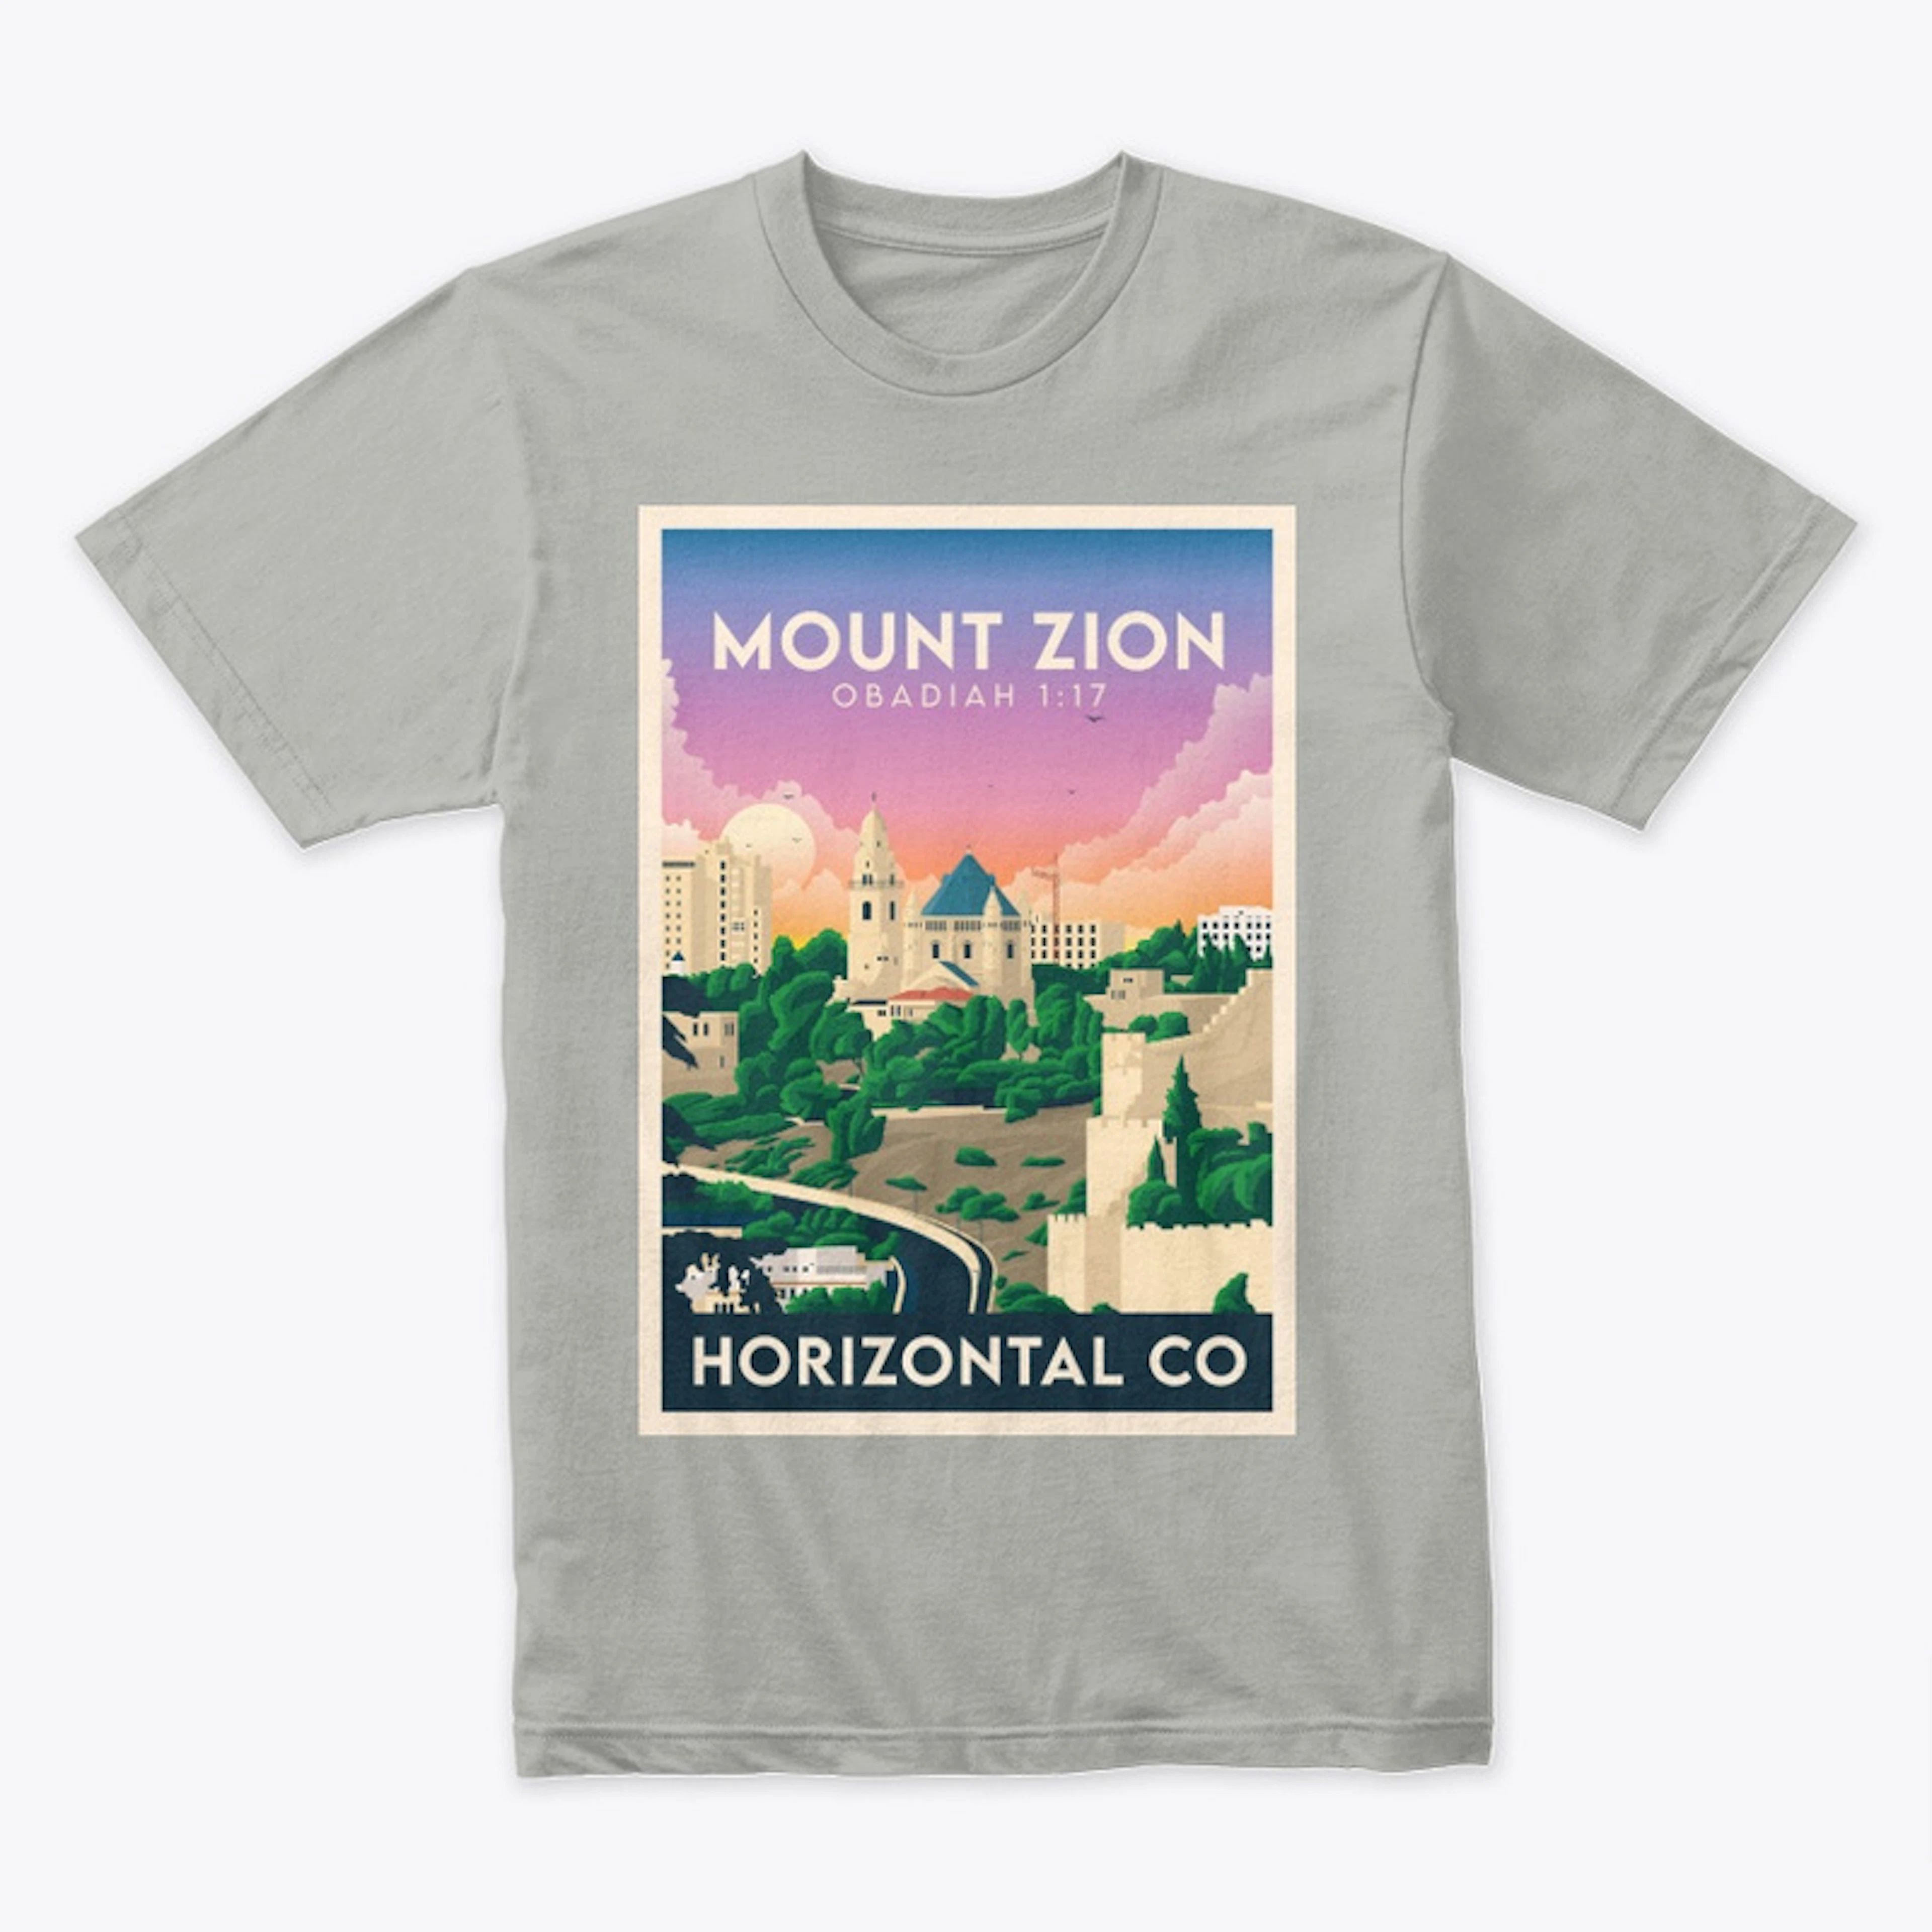 MOUNT ZION